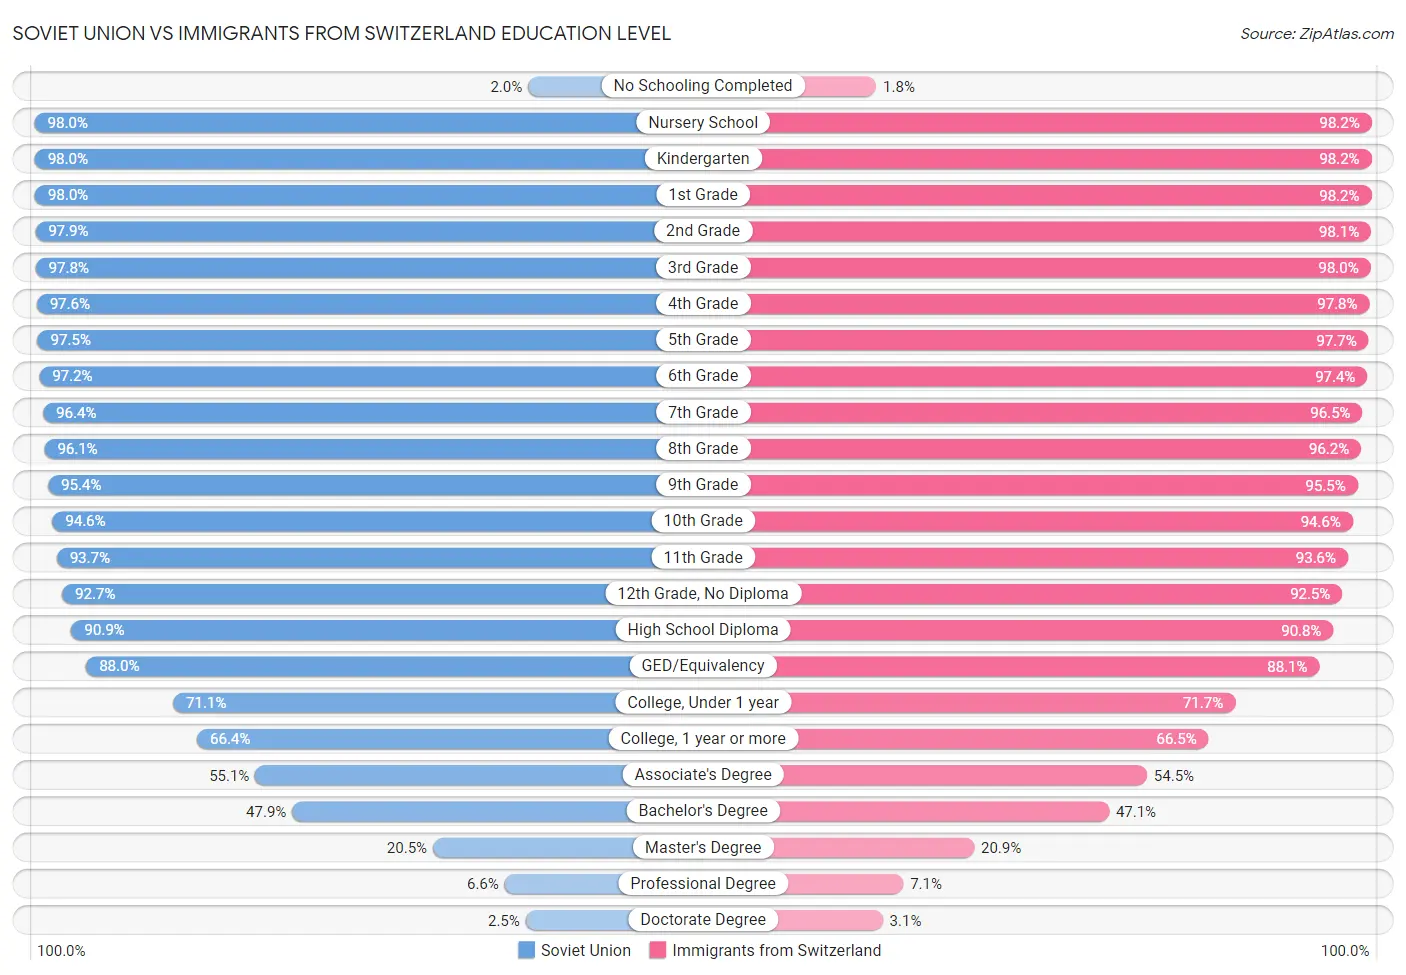 Soviet Union vs Immigrants from Switzerland Education Level